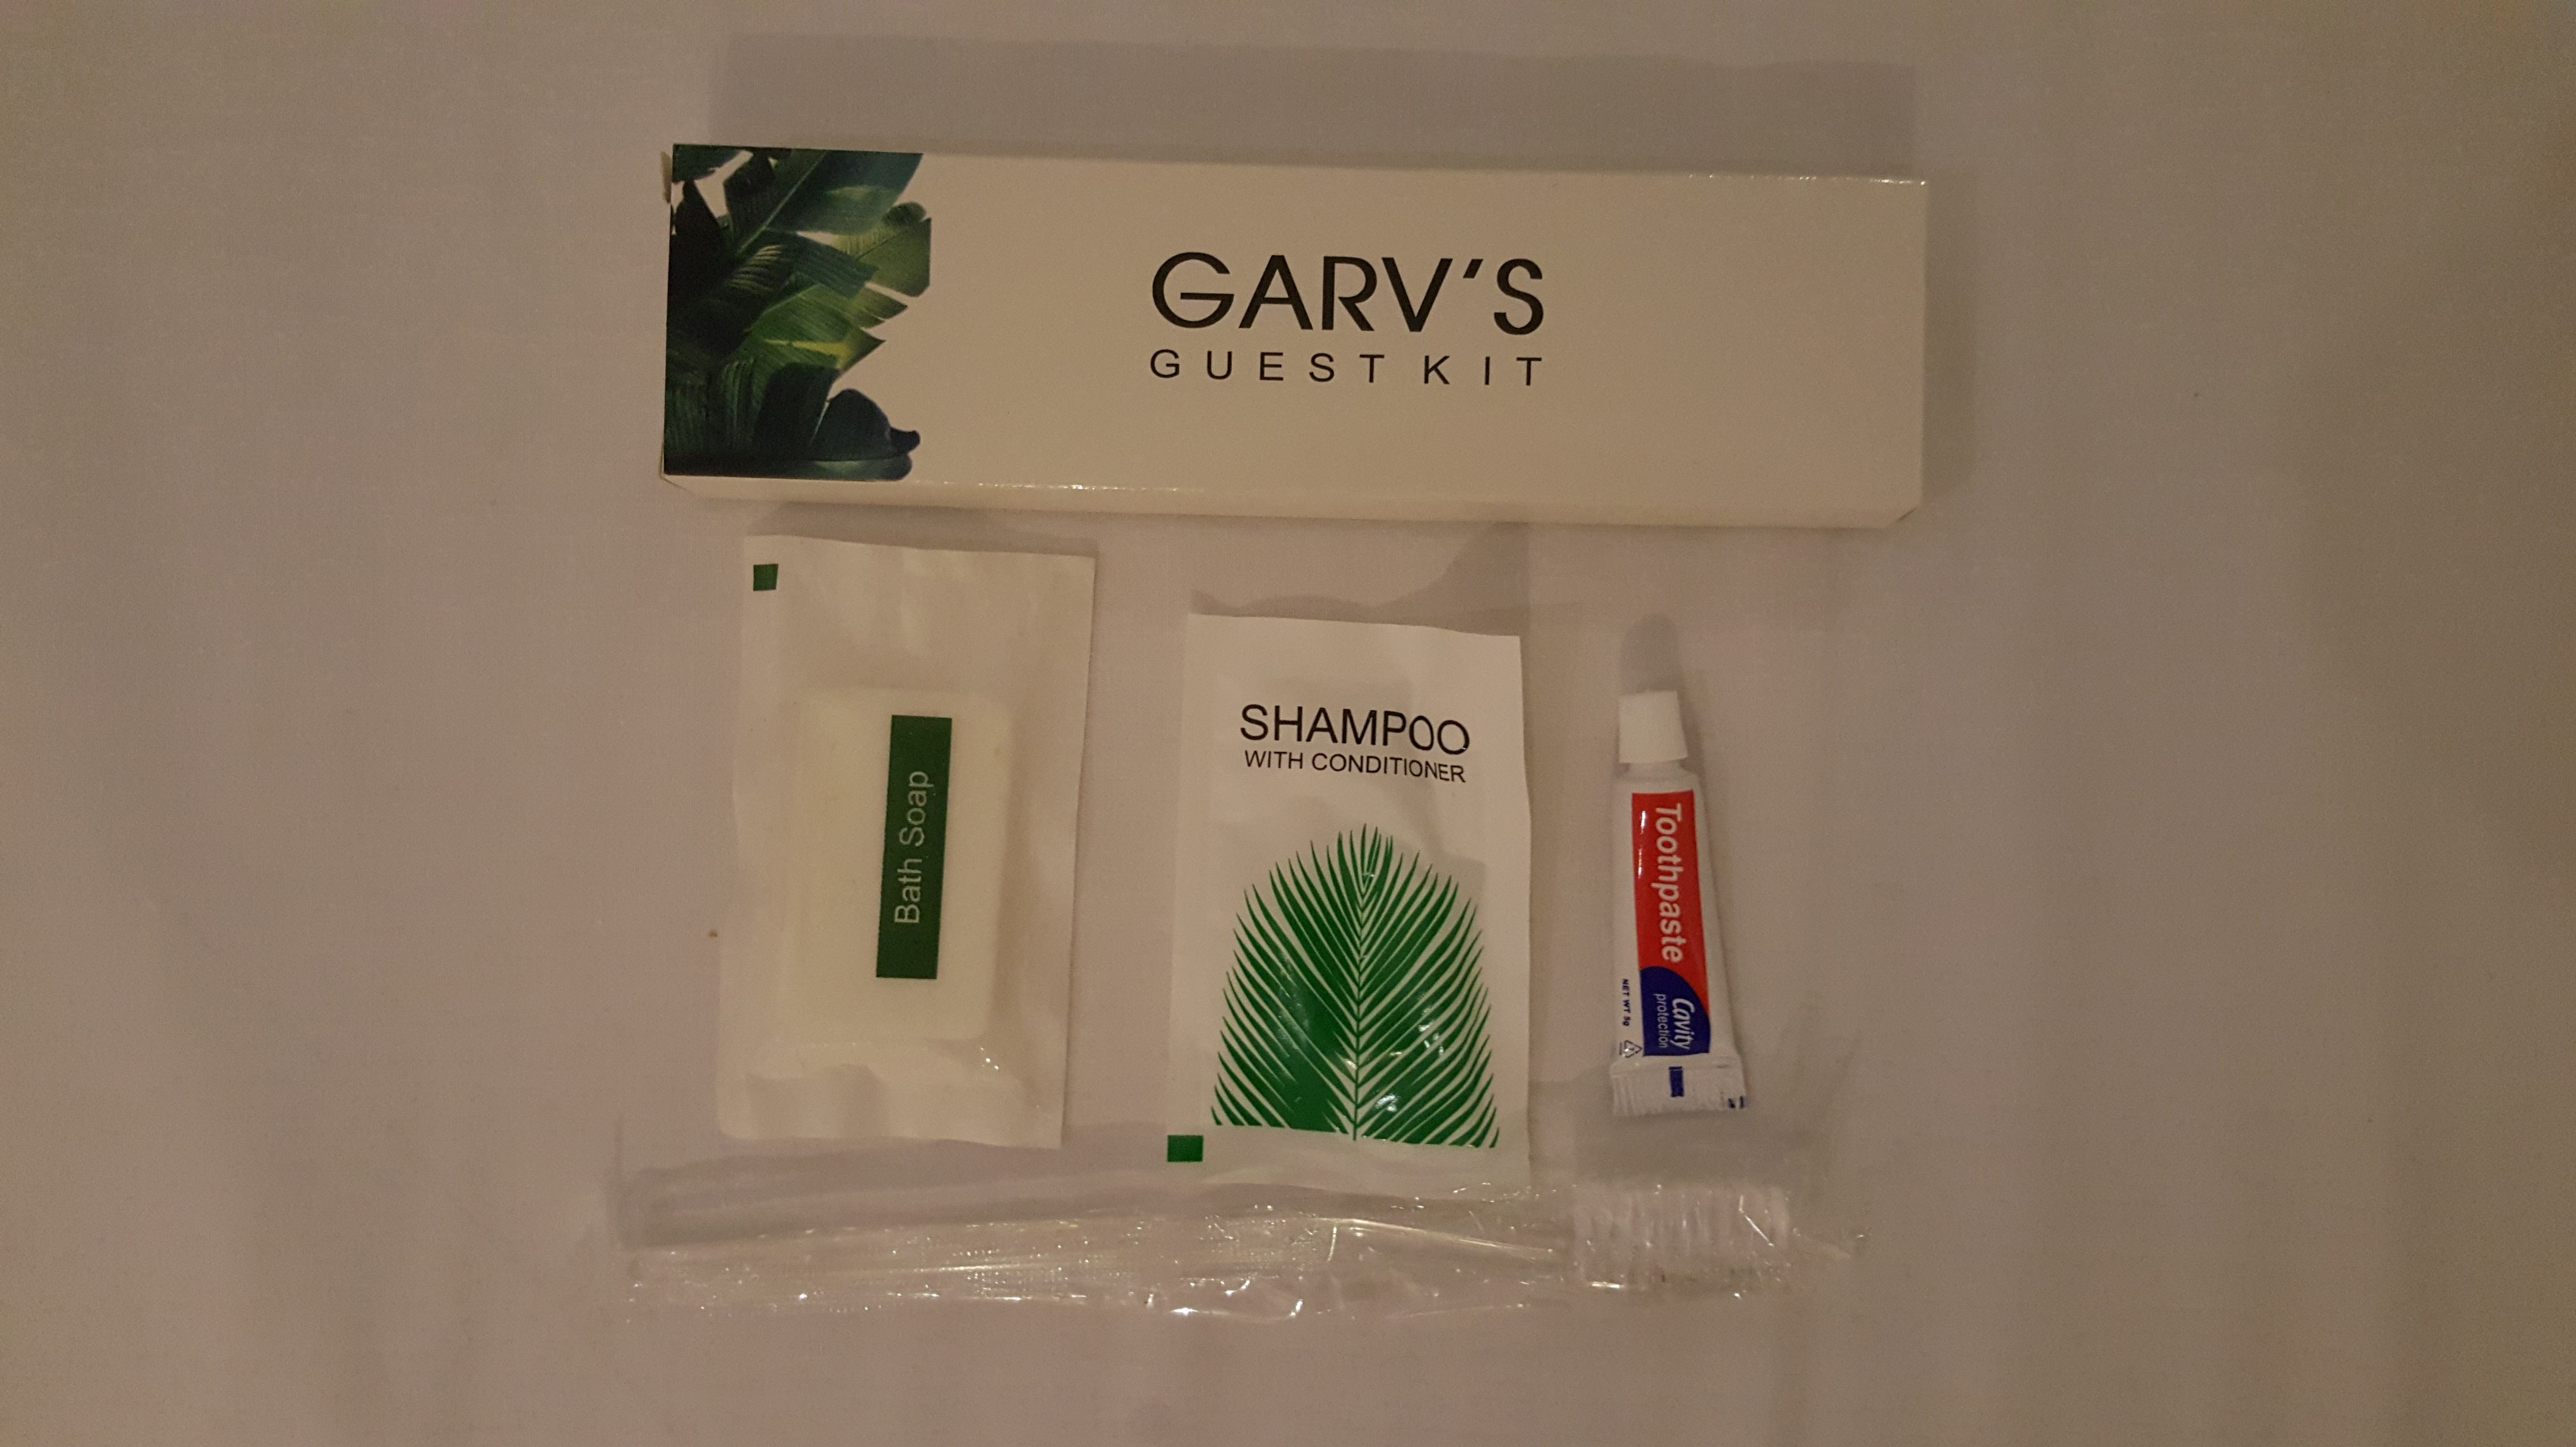 GARV'S Boutique Hotel Guest Kit